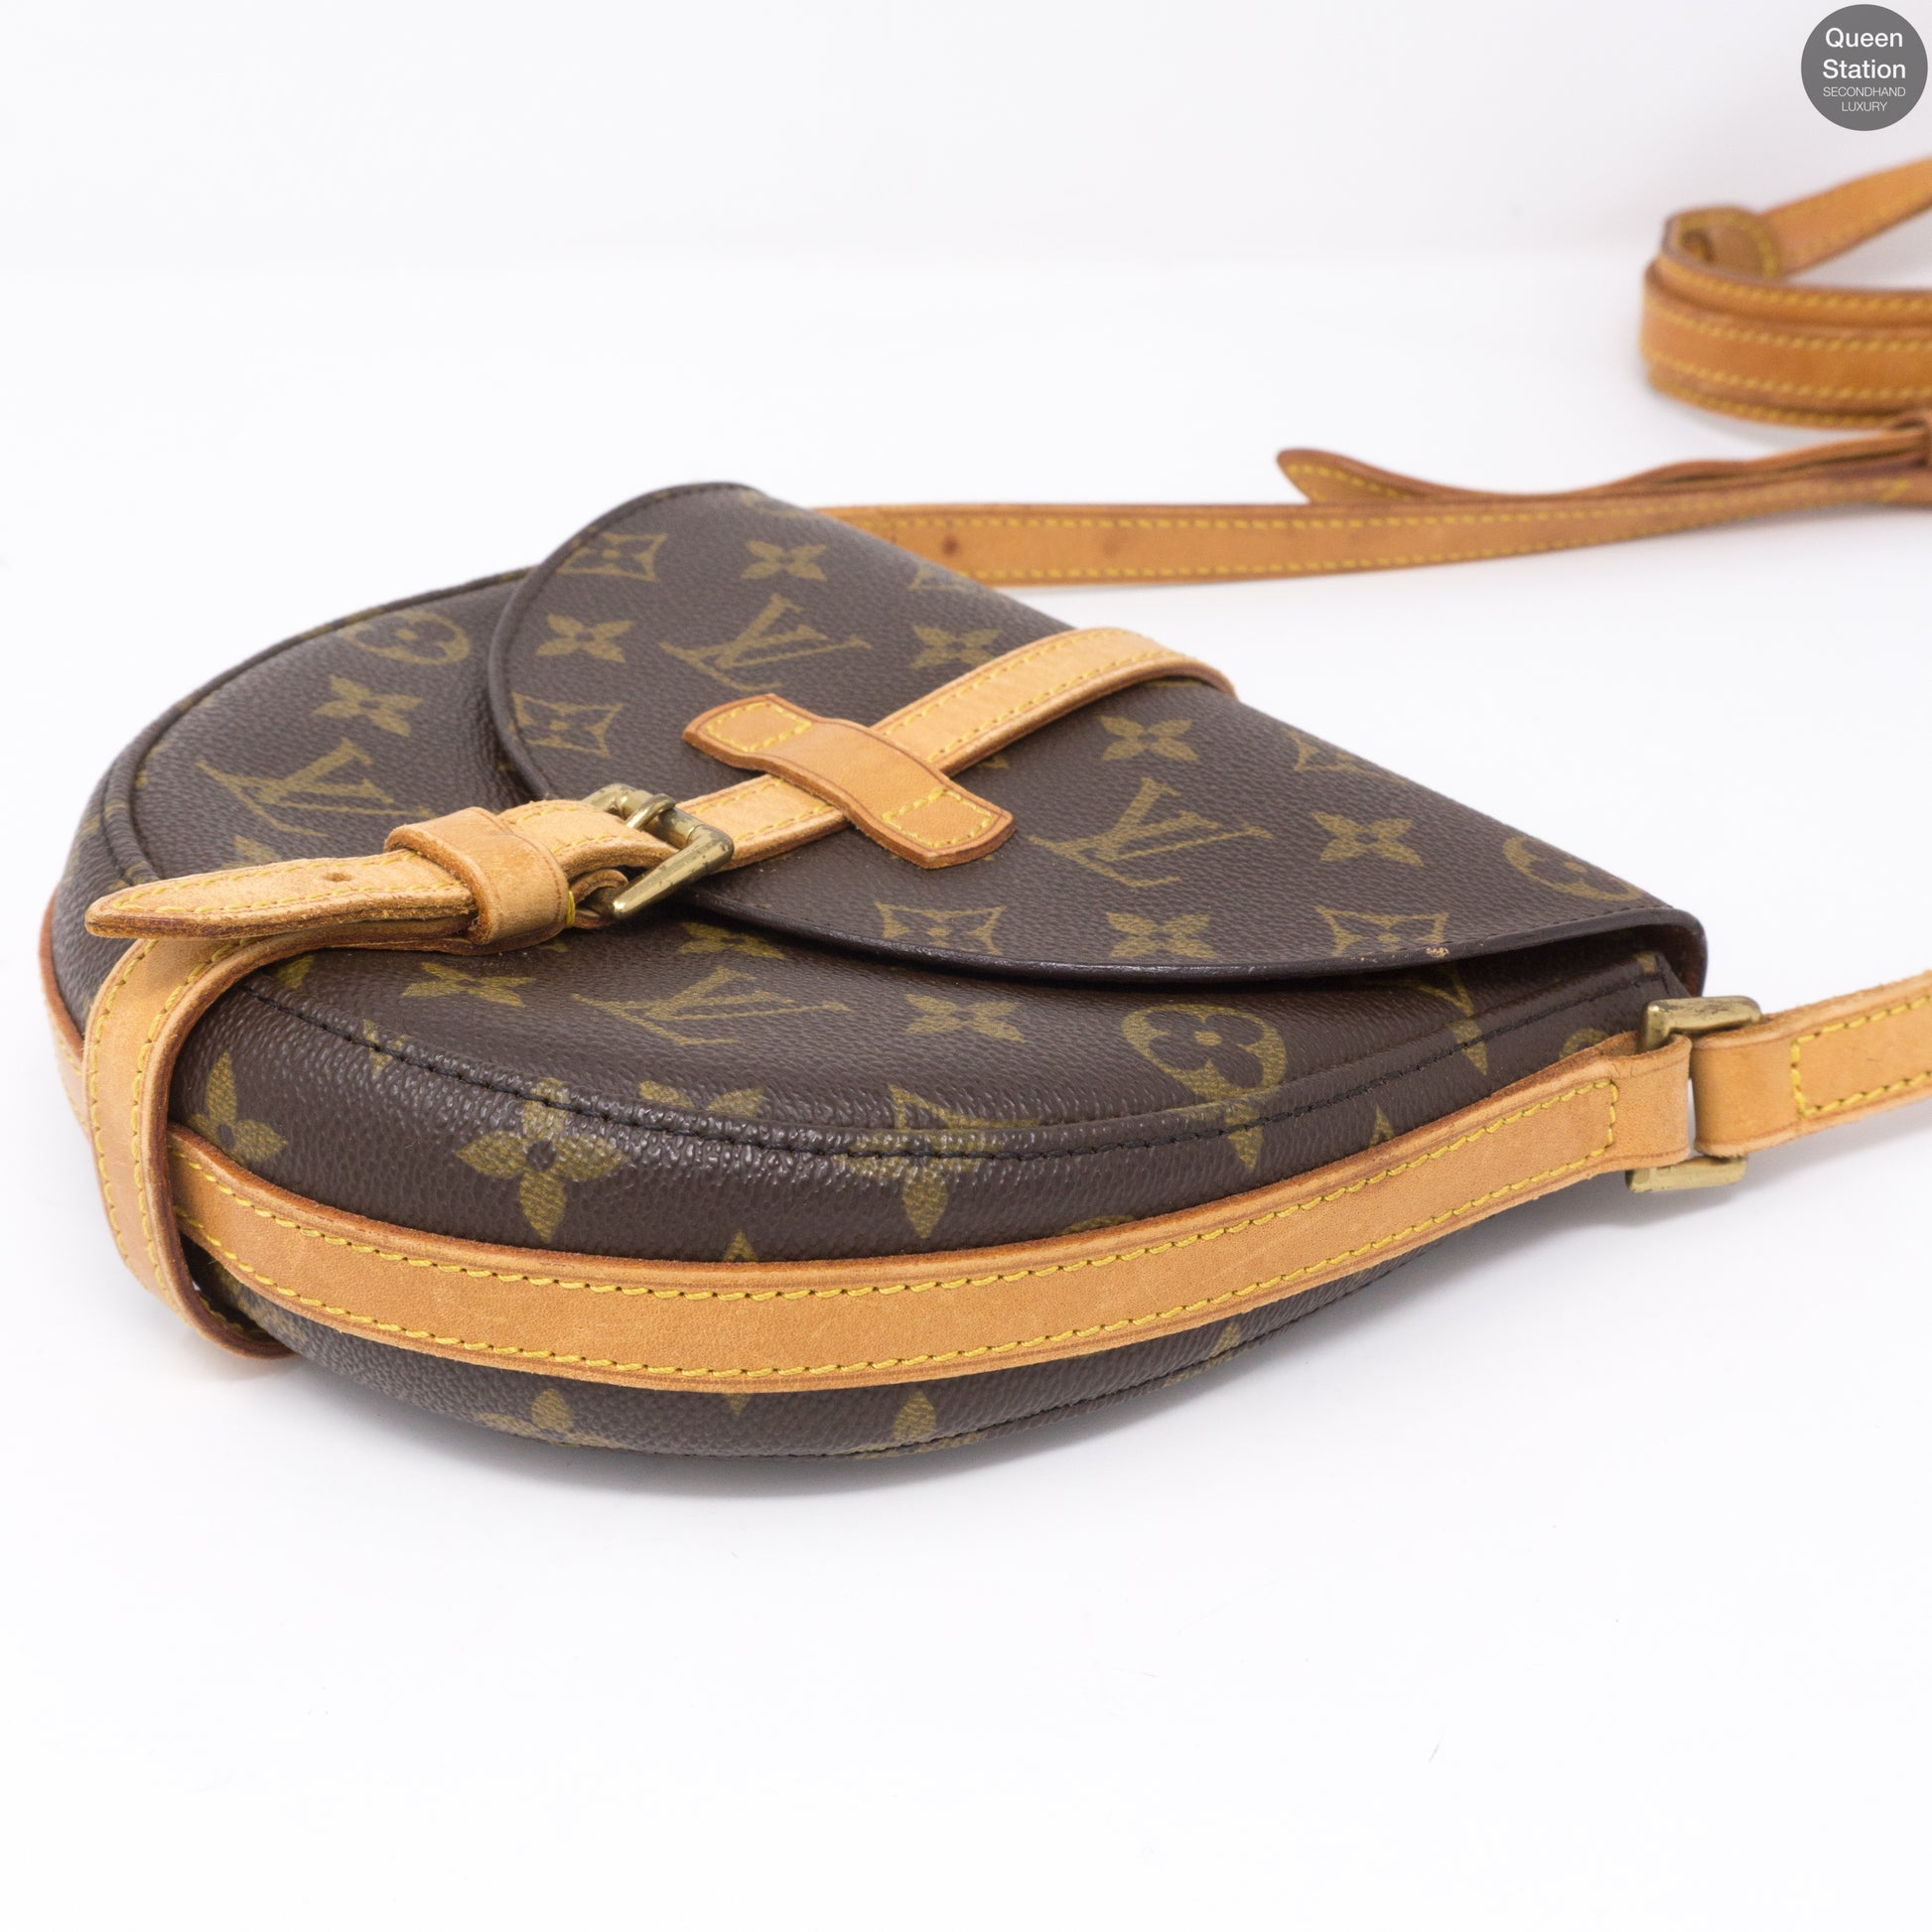 Louis Vuitton Shanti PM Crossbody Bag